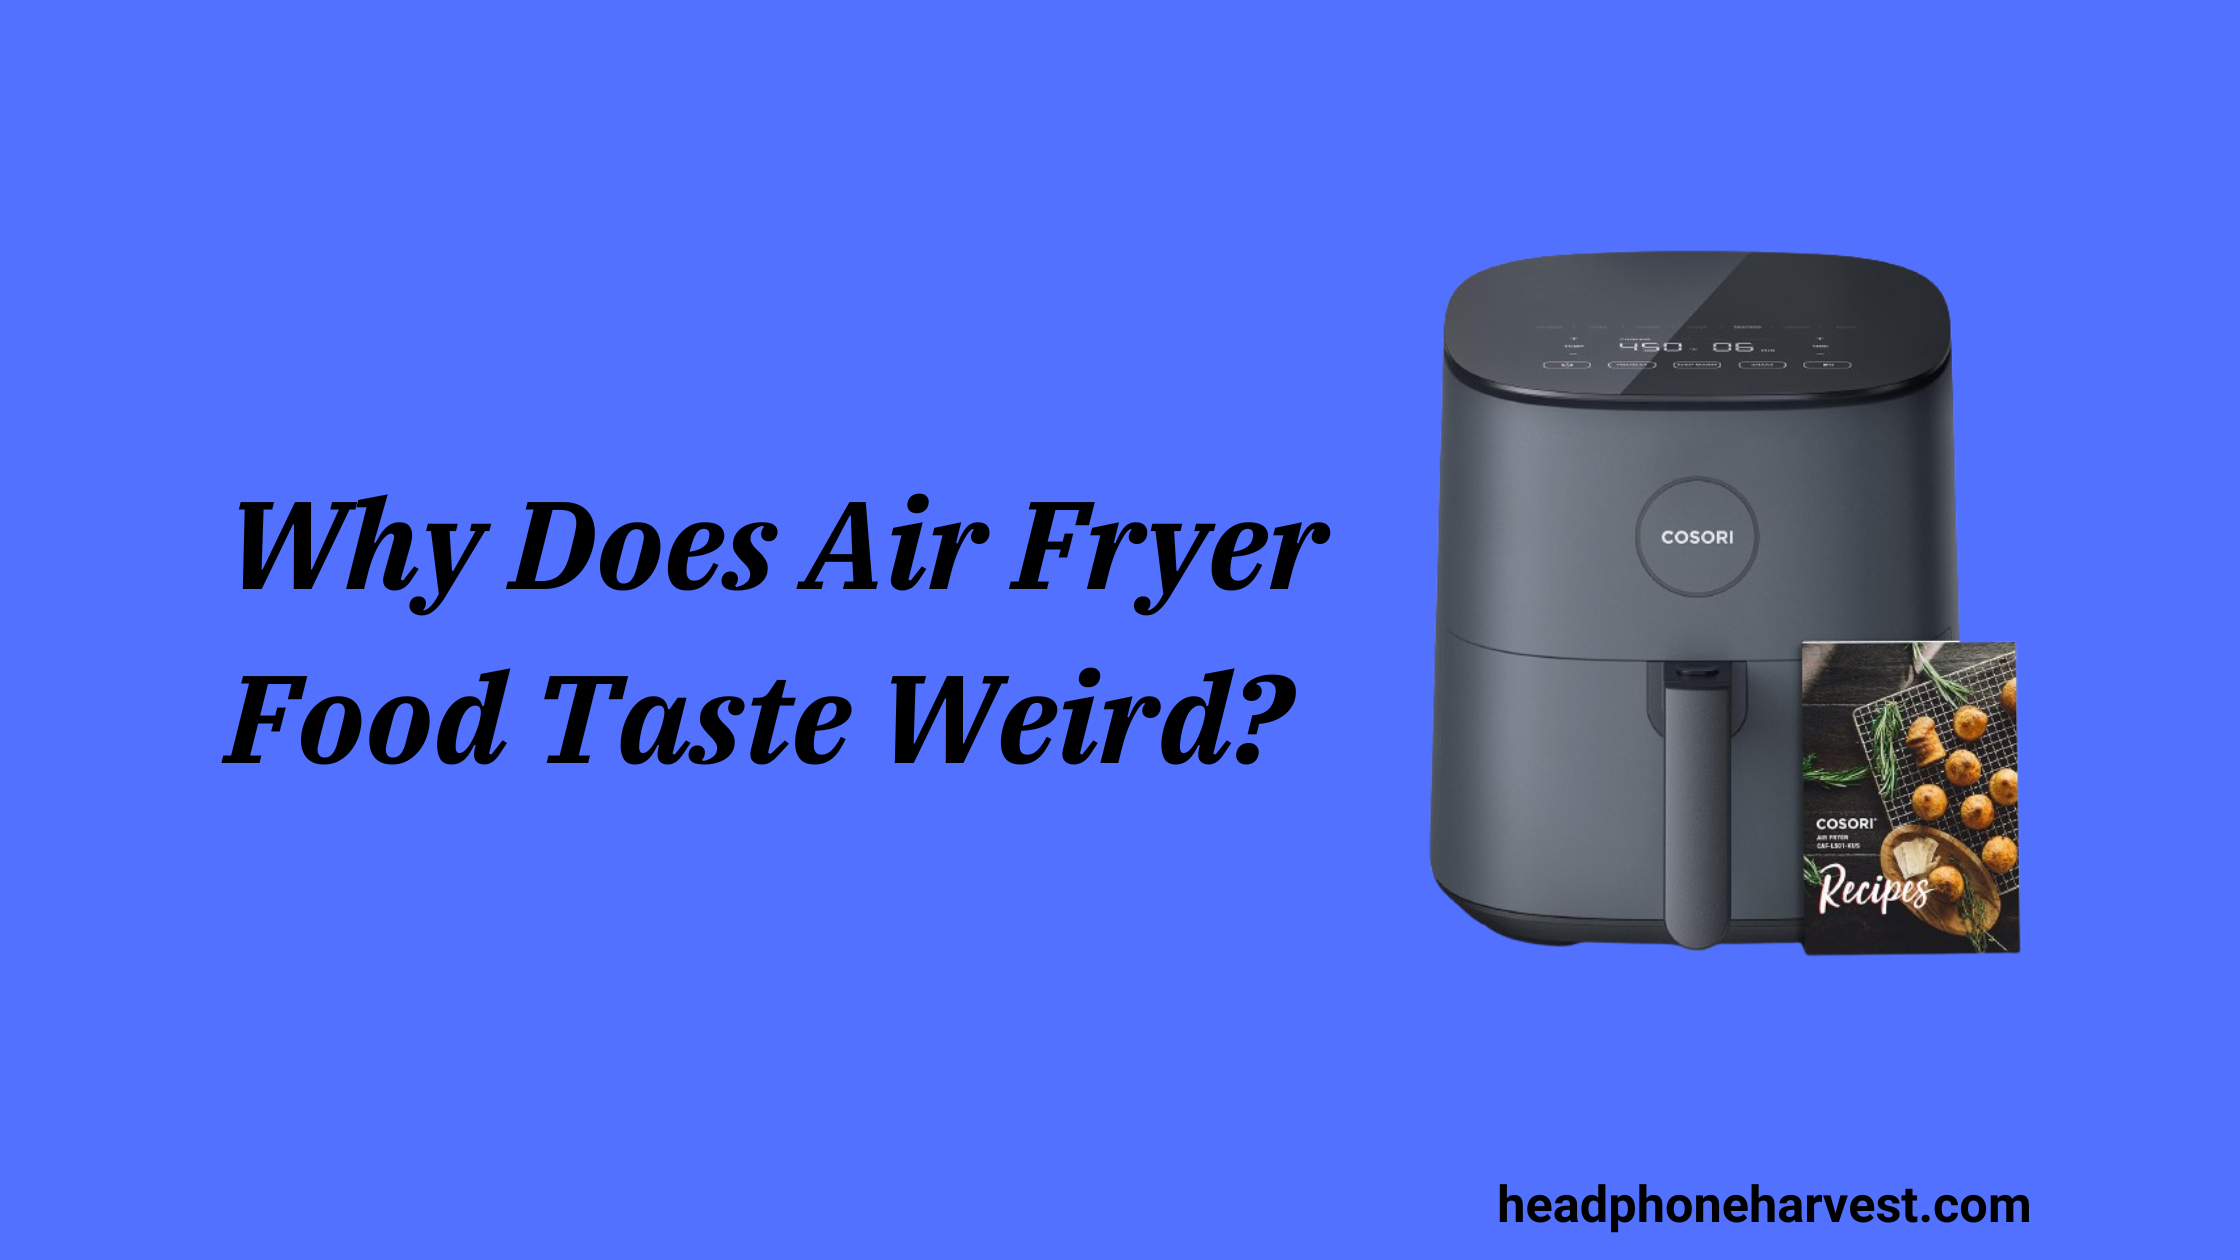 Why Does Air Fryer Food Taste Weird?